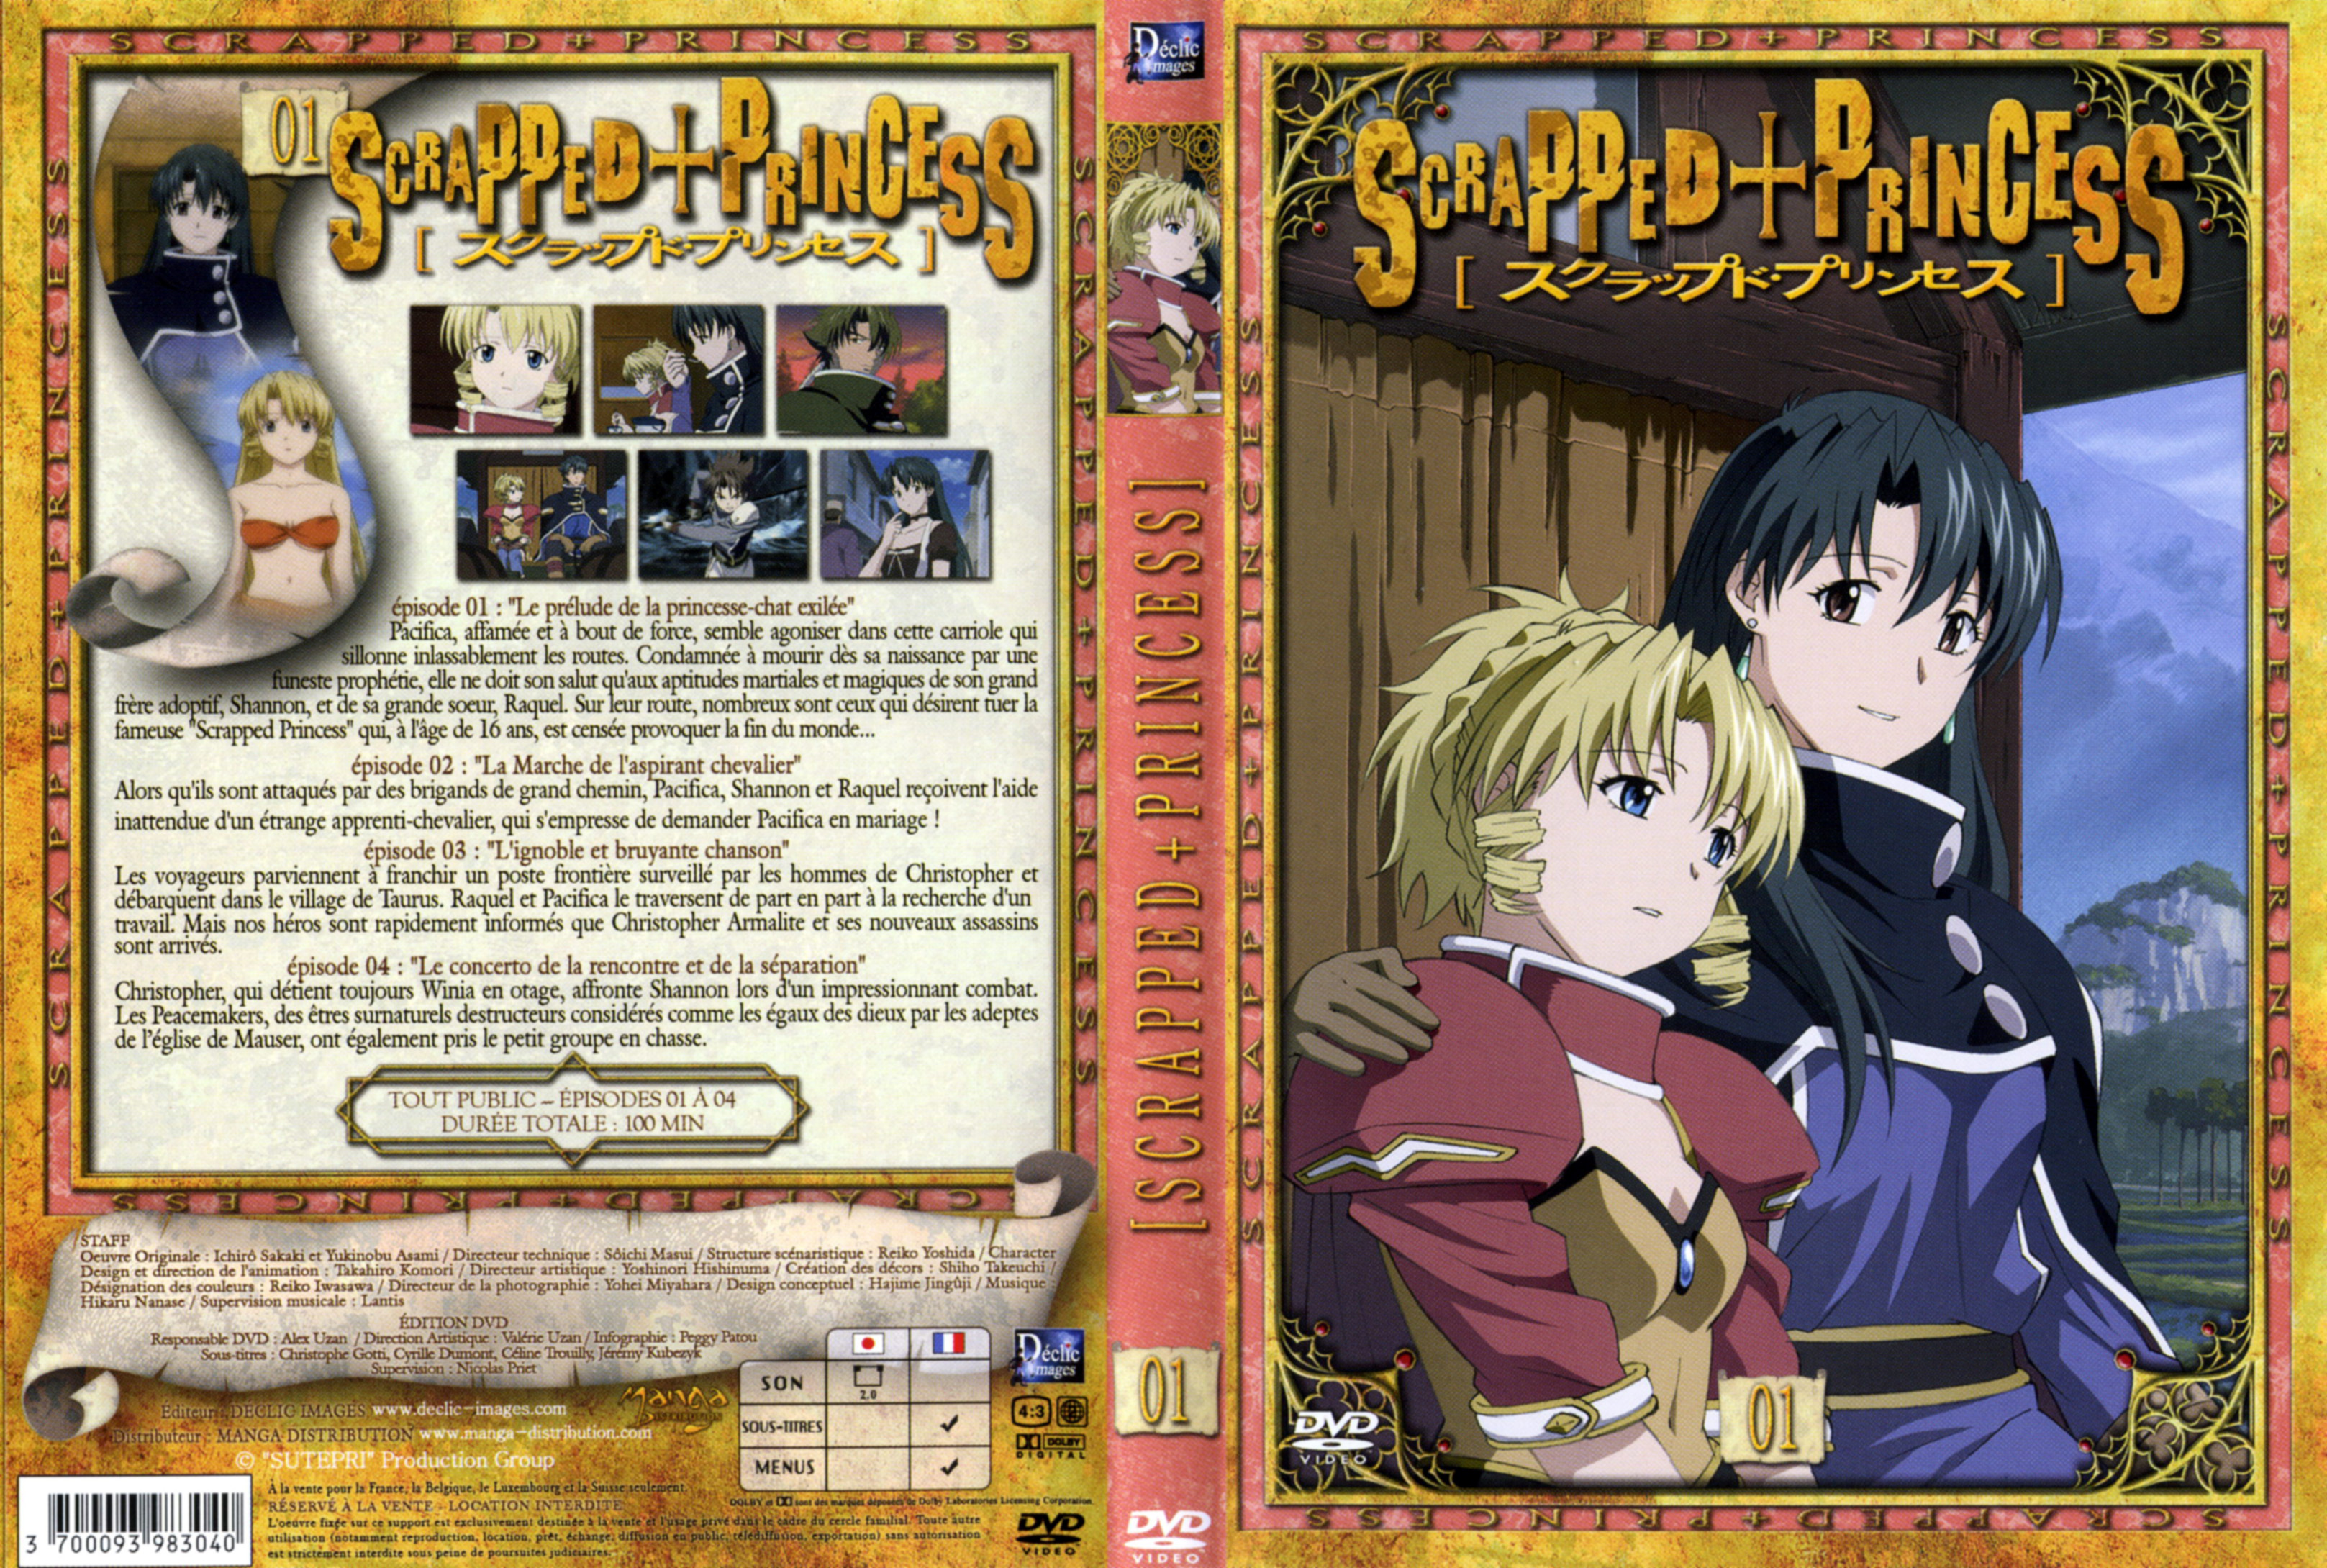 Jaquette DVD Scrapped princess vol 01